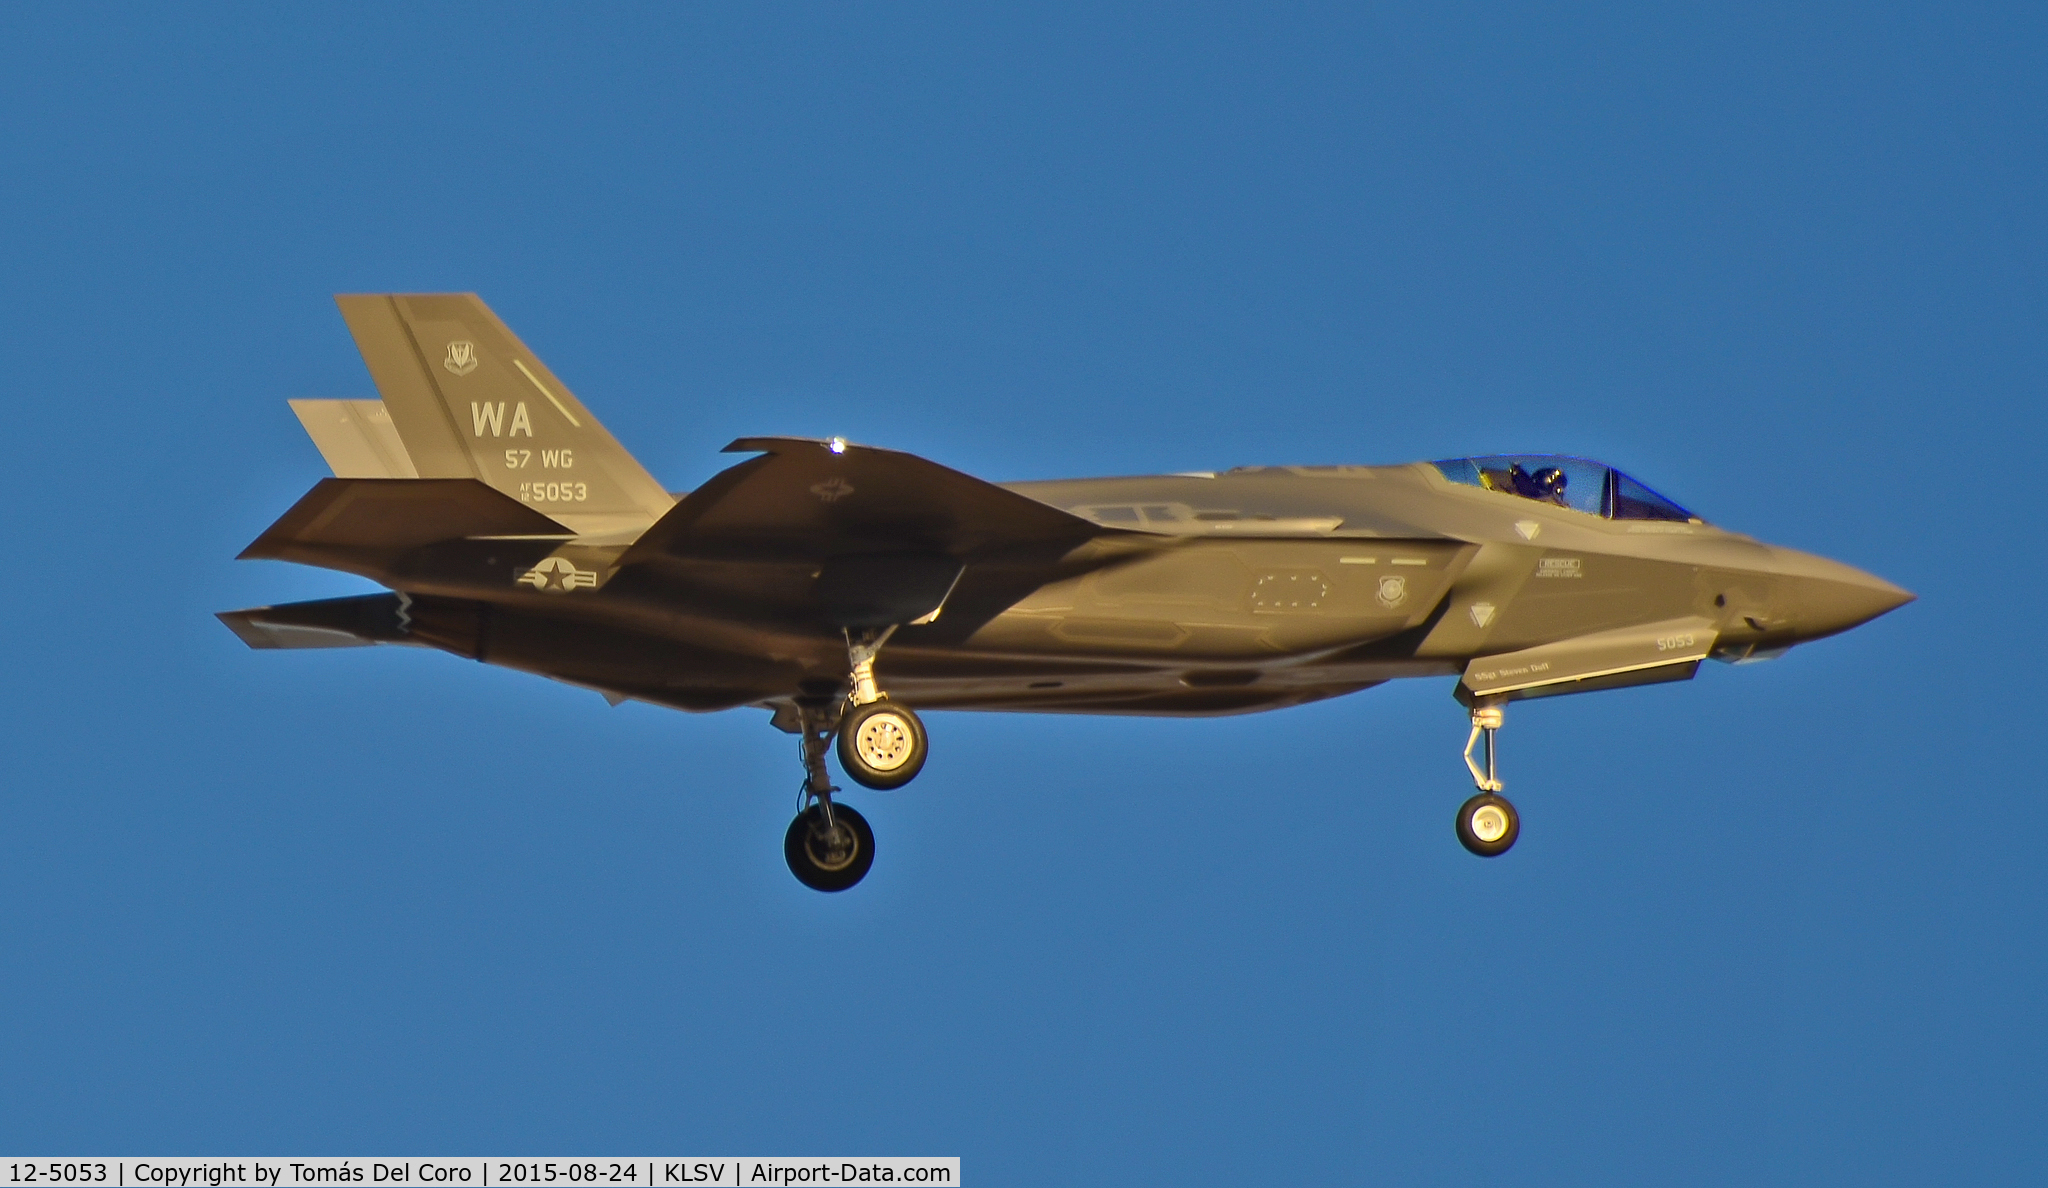 12-5053, 2014 Lockheed Martin F-35A Lightning II C/N AF-64, Lockheed Martin F-35A Lightning II 12-5053 C/N AF-64 - 57th Wing (57 WG) - RED FLAG 15-4 August 17 to 28

Las Vegas - Nellis AFB (LSV / KLSV)
TDelCoro
August 24, 2015